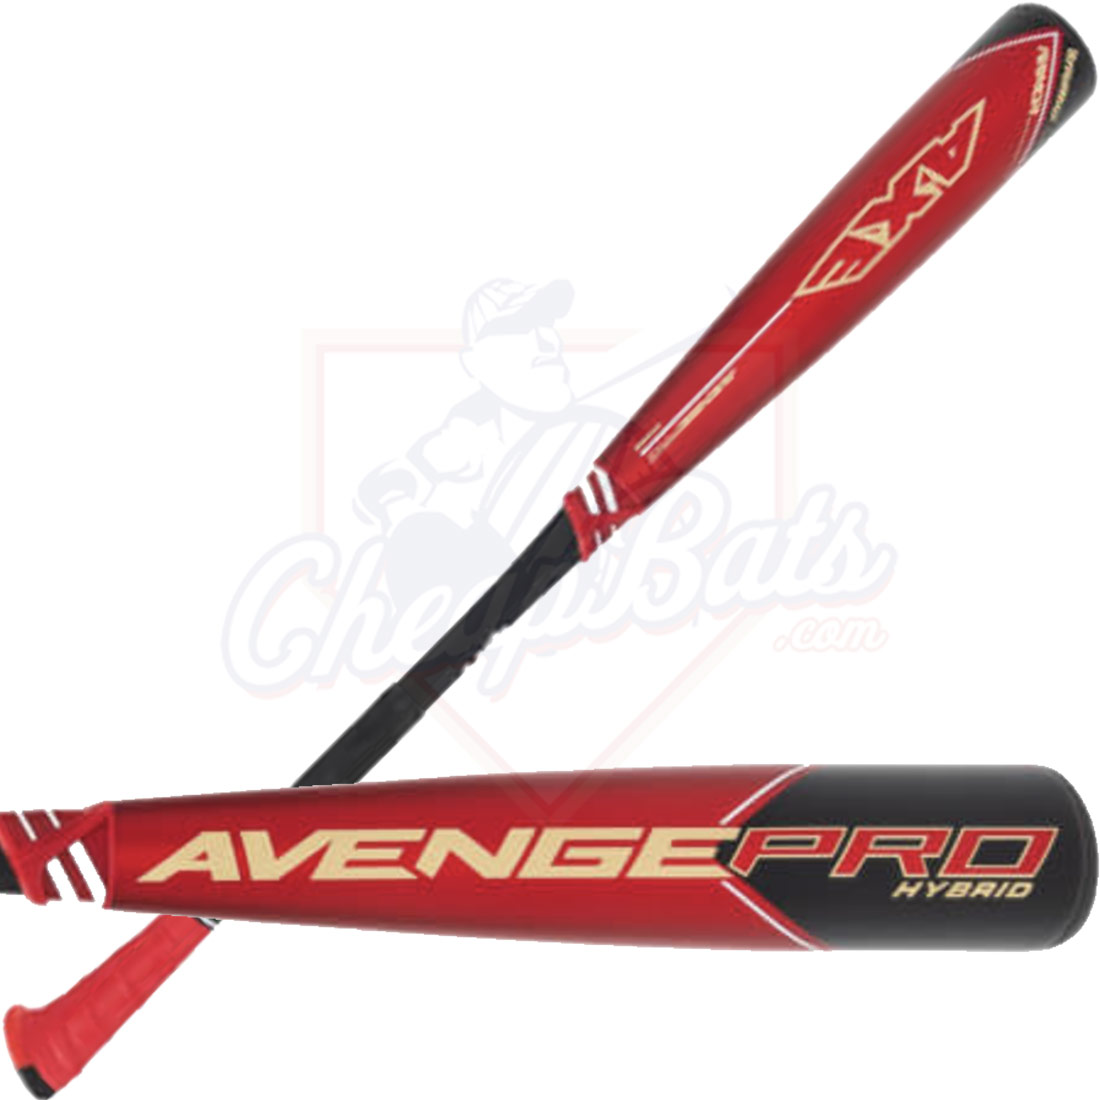 2023 Axe Avenge Hybrid Youth USA Baseball Bat -10oz L194K